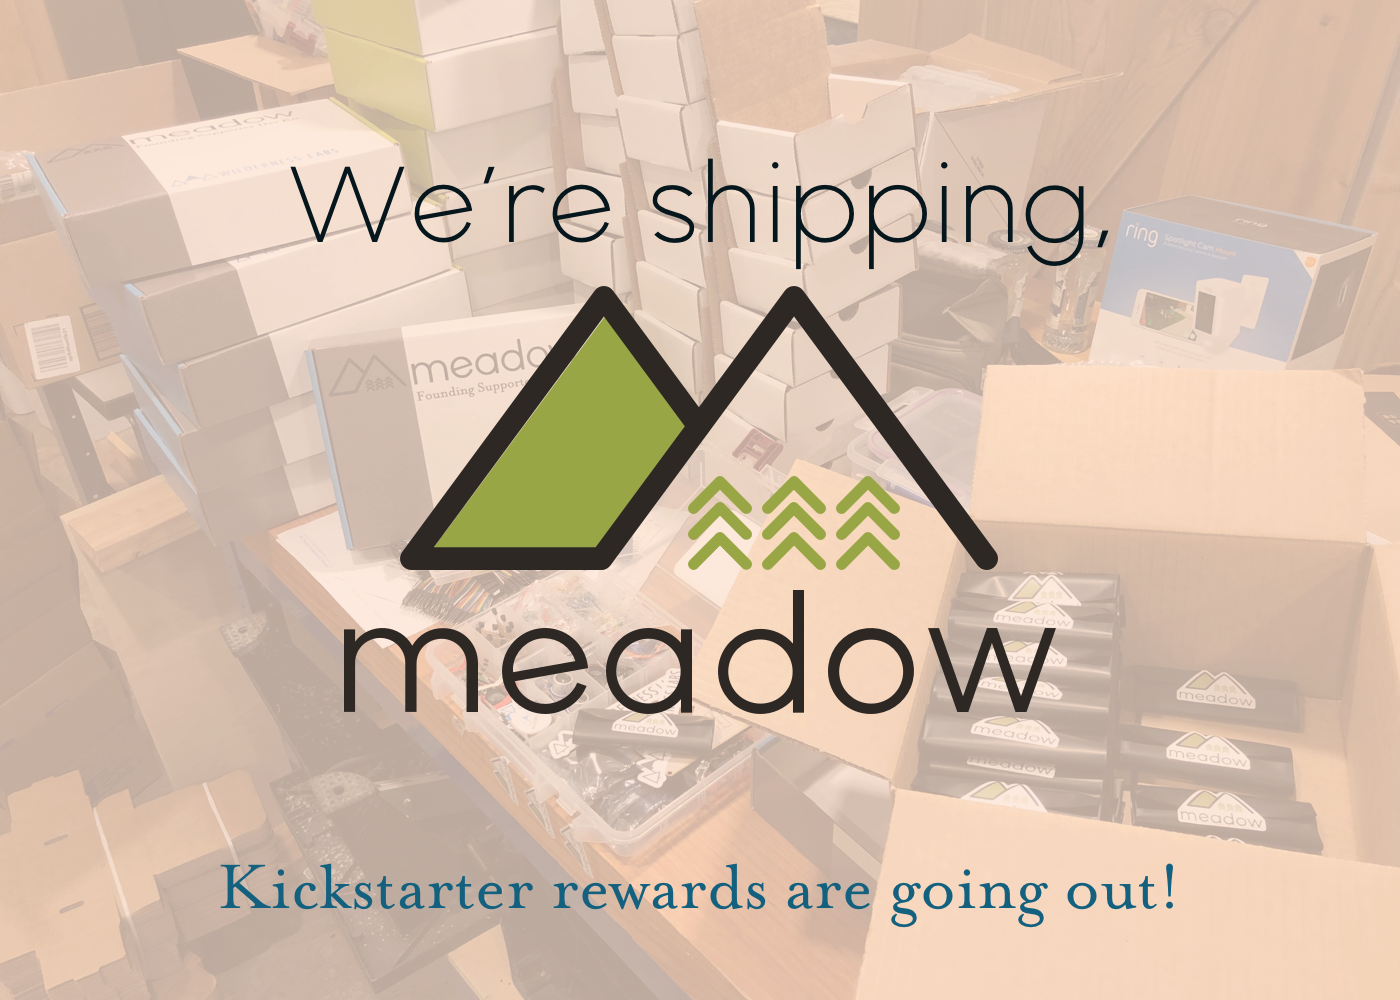 We're shipping Meadow Kickstarter rewards.